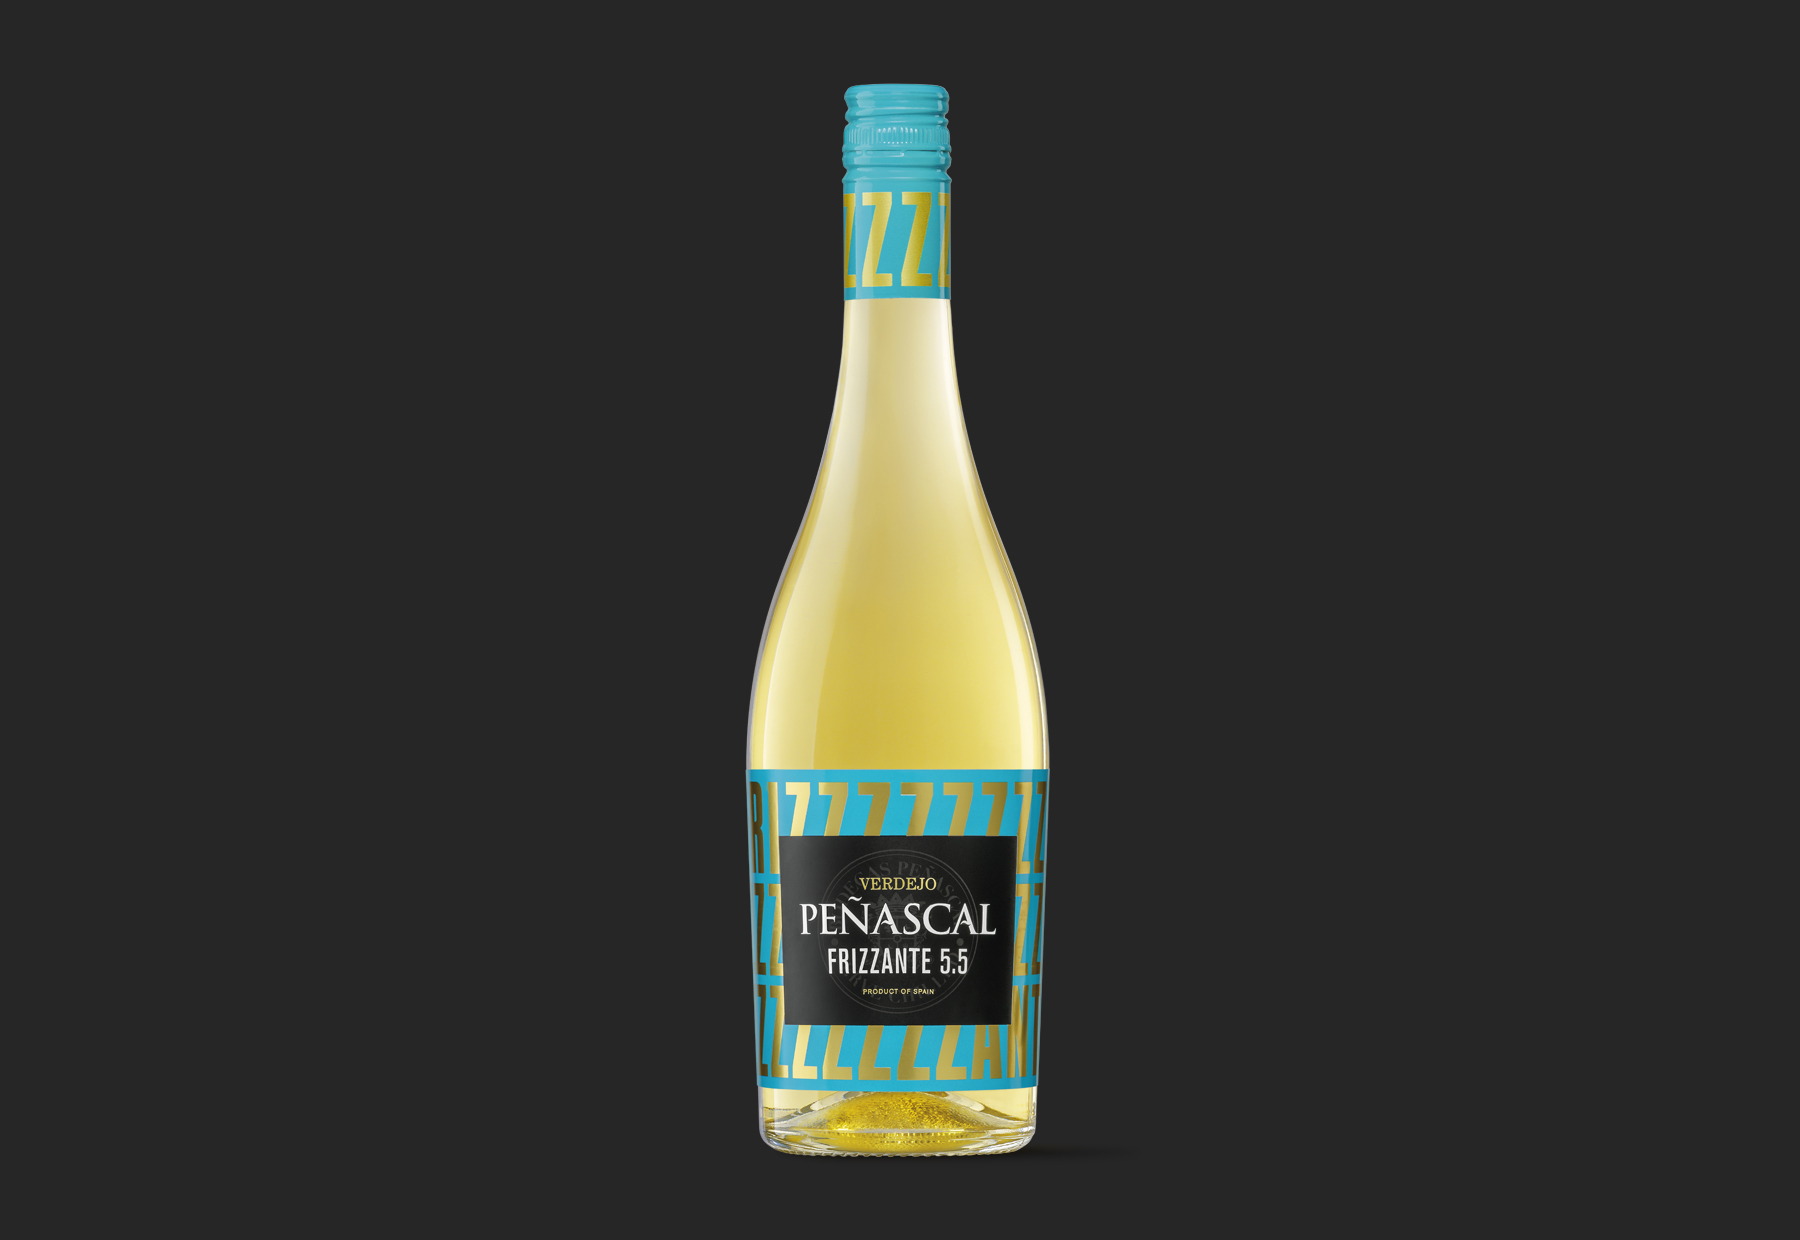 Peñascal Frizzante Wine Packaging Design by Moruba